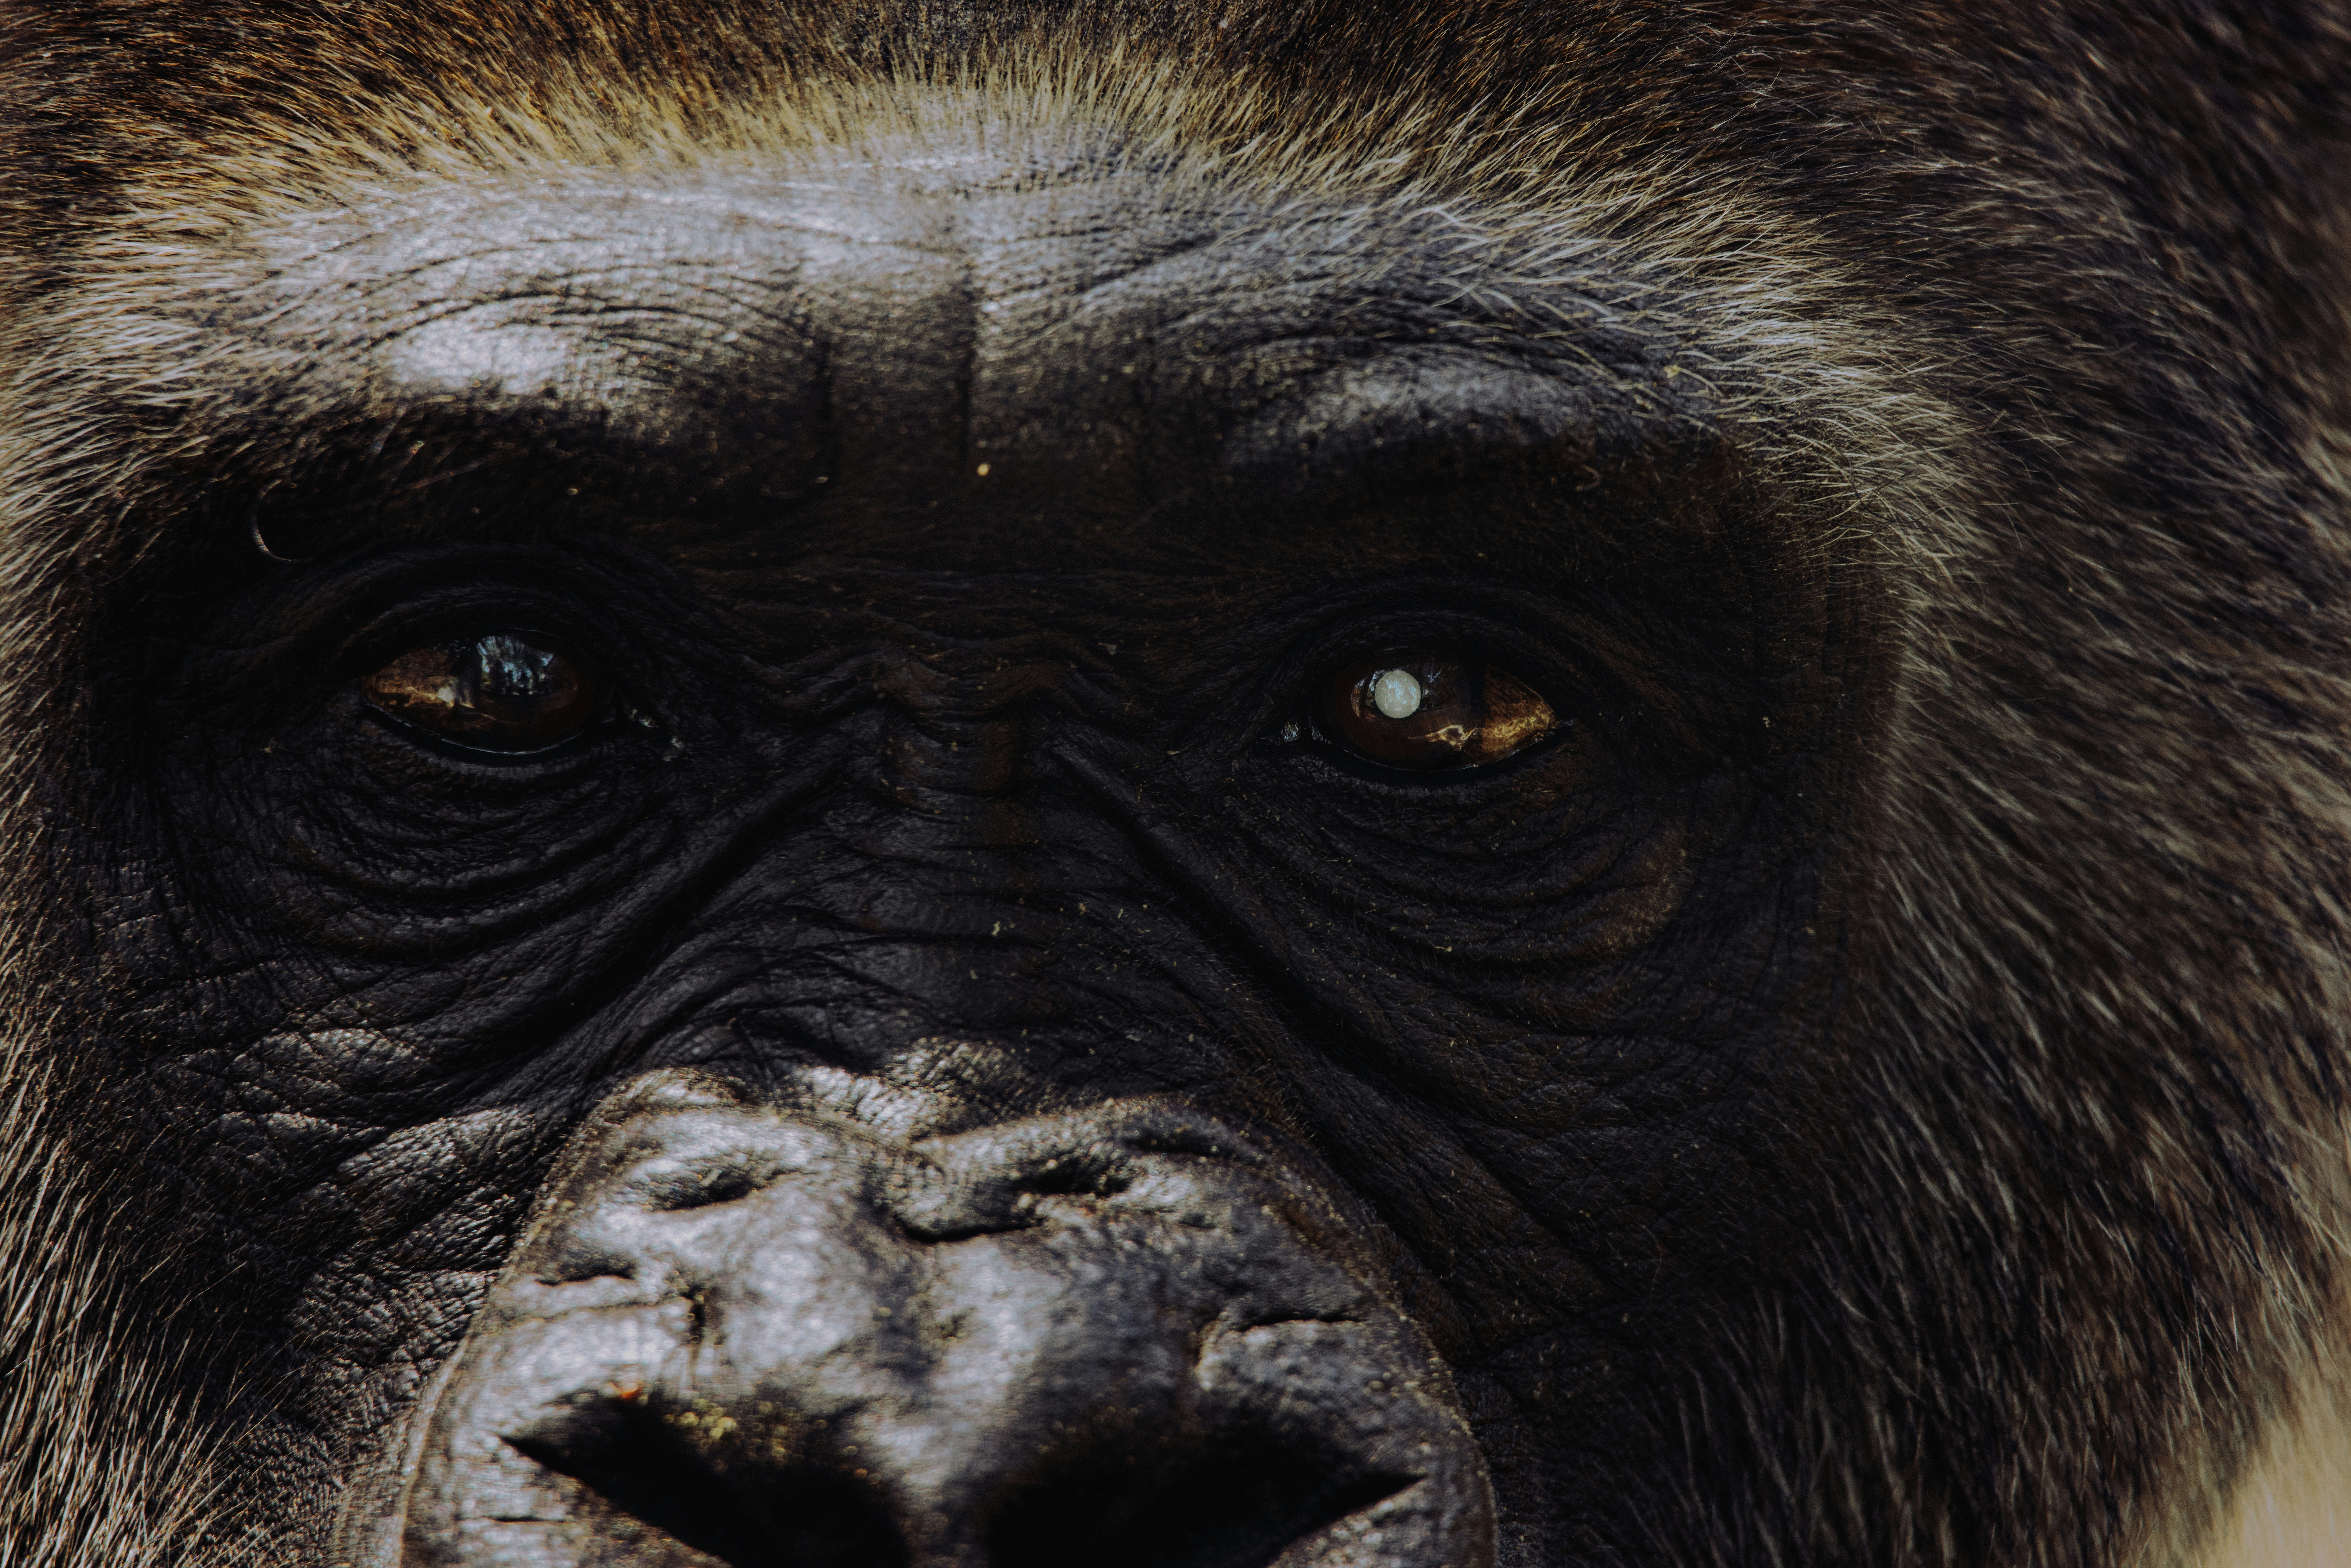 April 27th, 2023: Black Gorilla Eyes